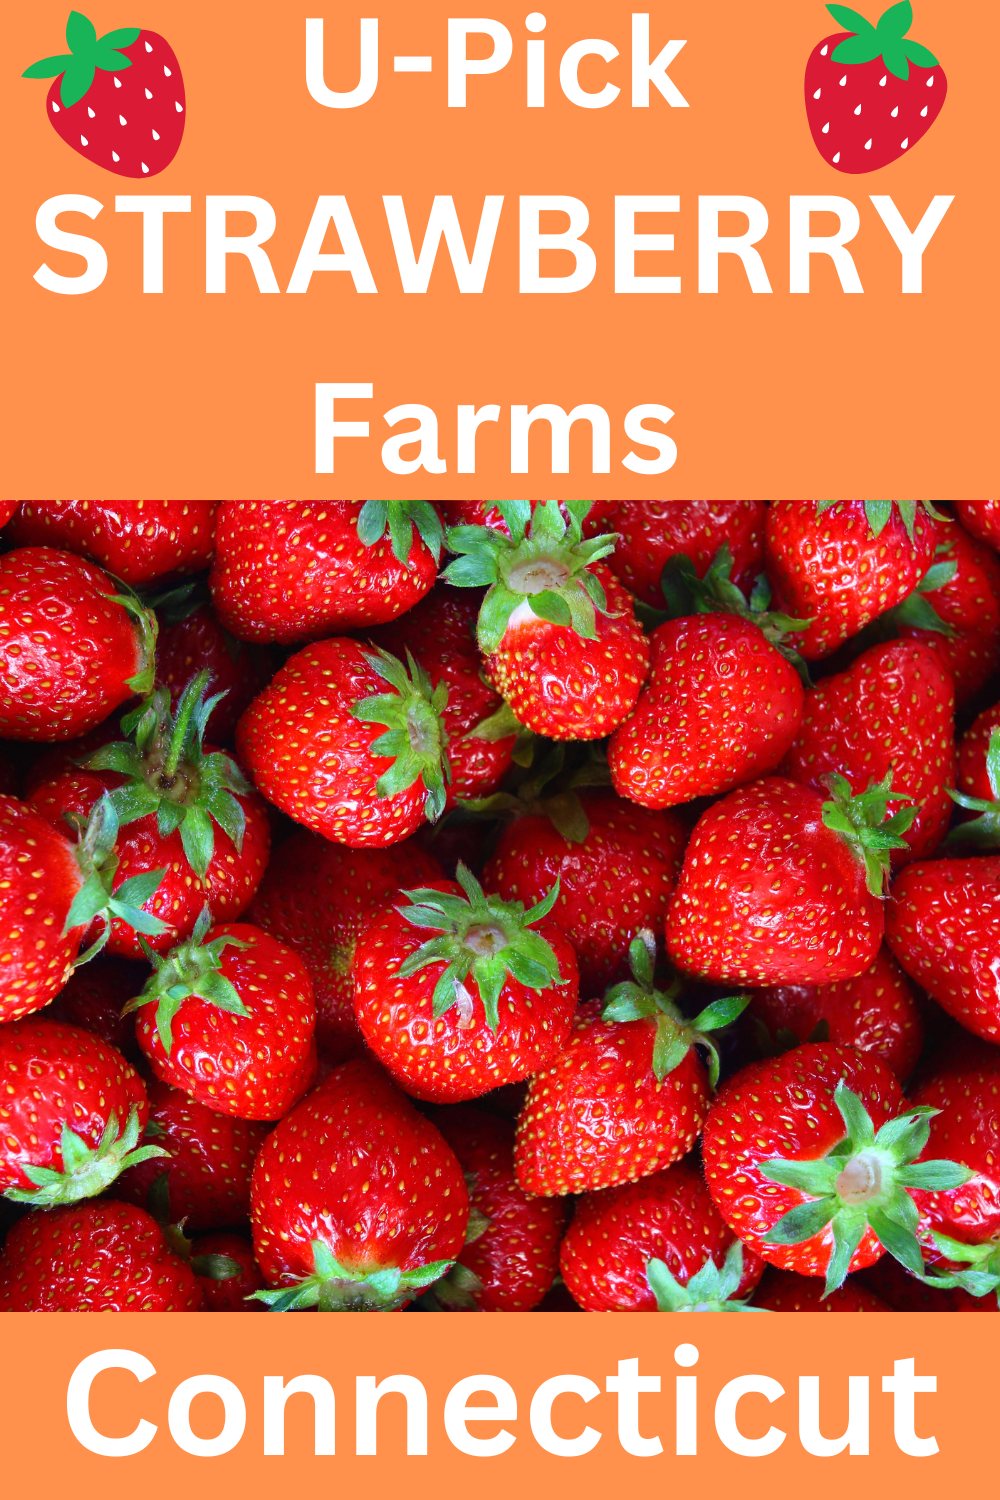 onnecticut U-Pick Strawberry Farms